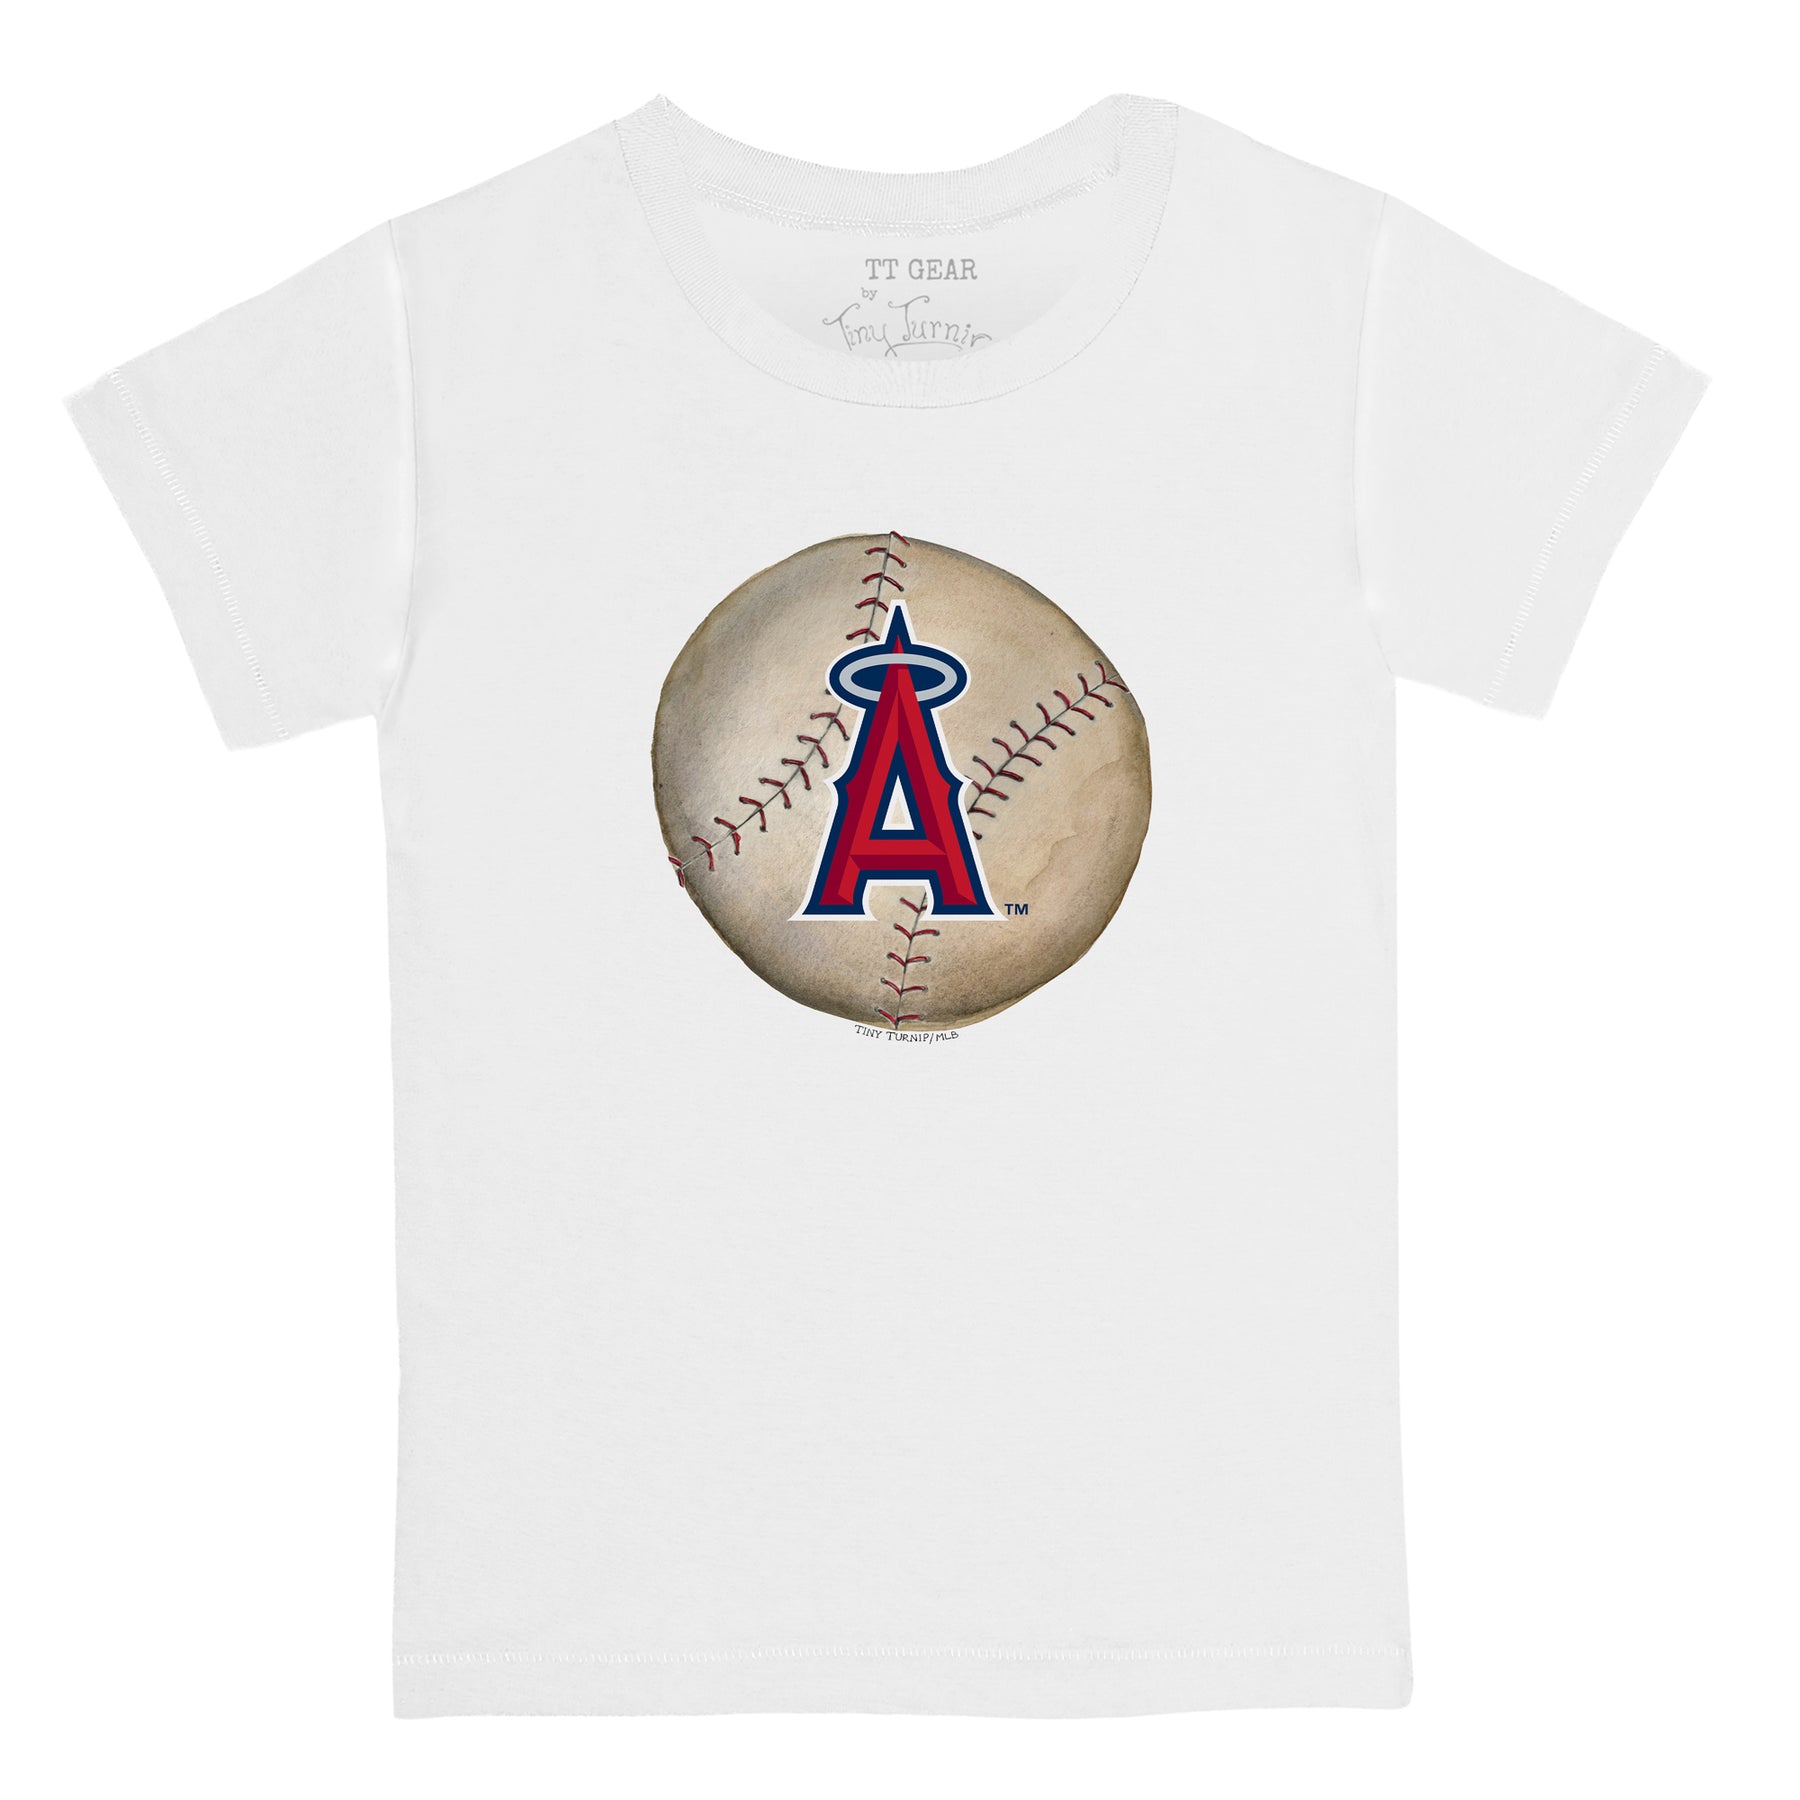 Los Angeles Angels Stitched Baseball Tee Shirt